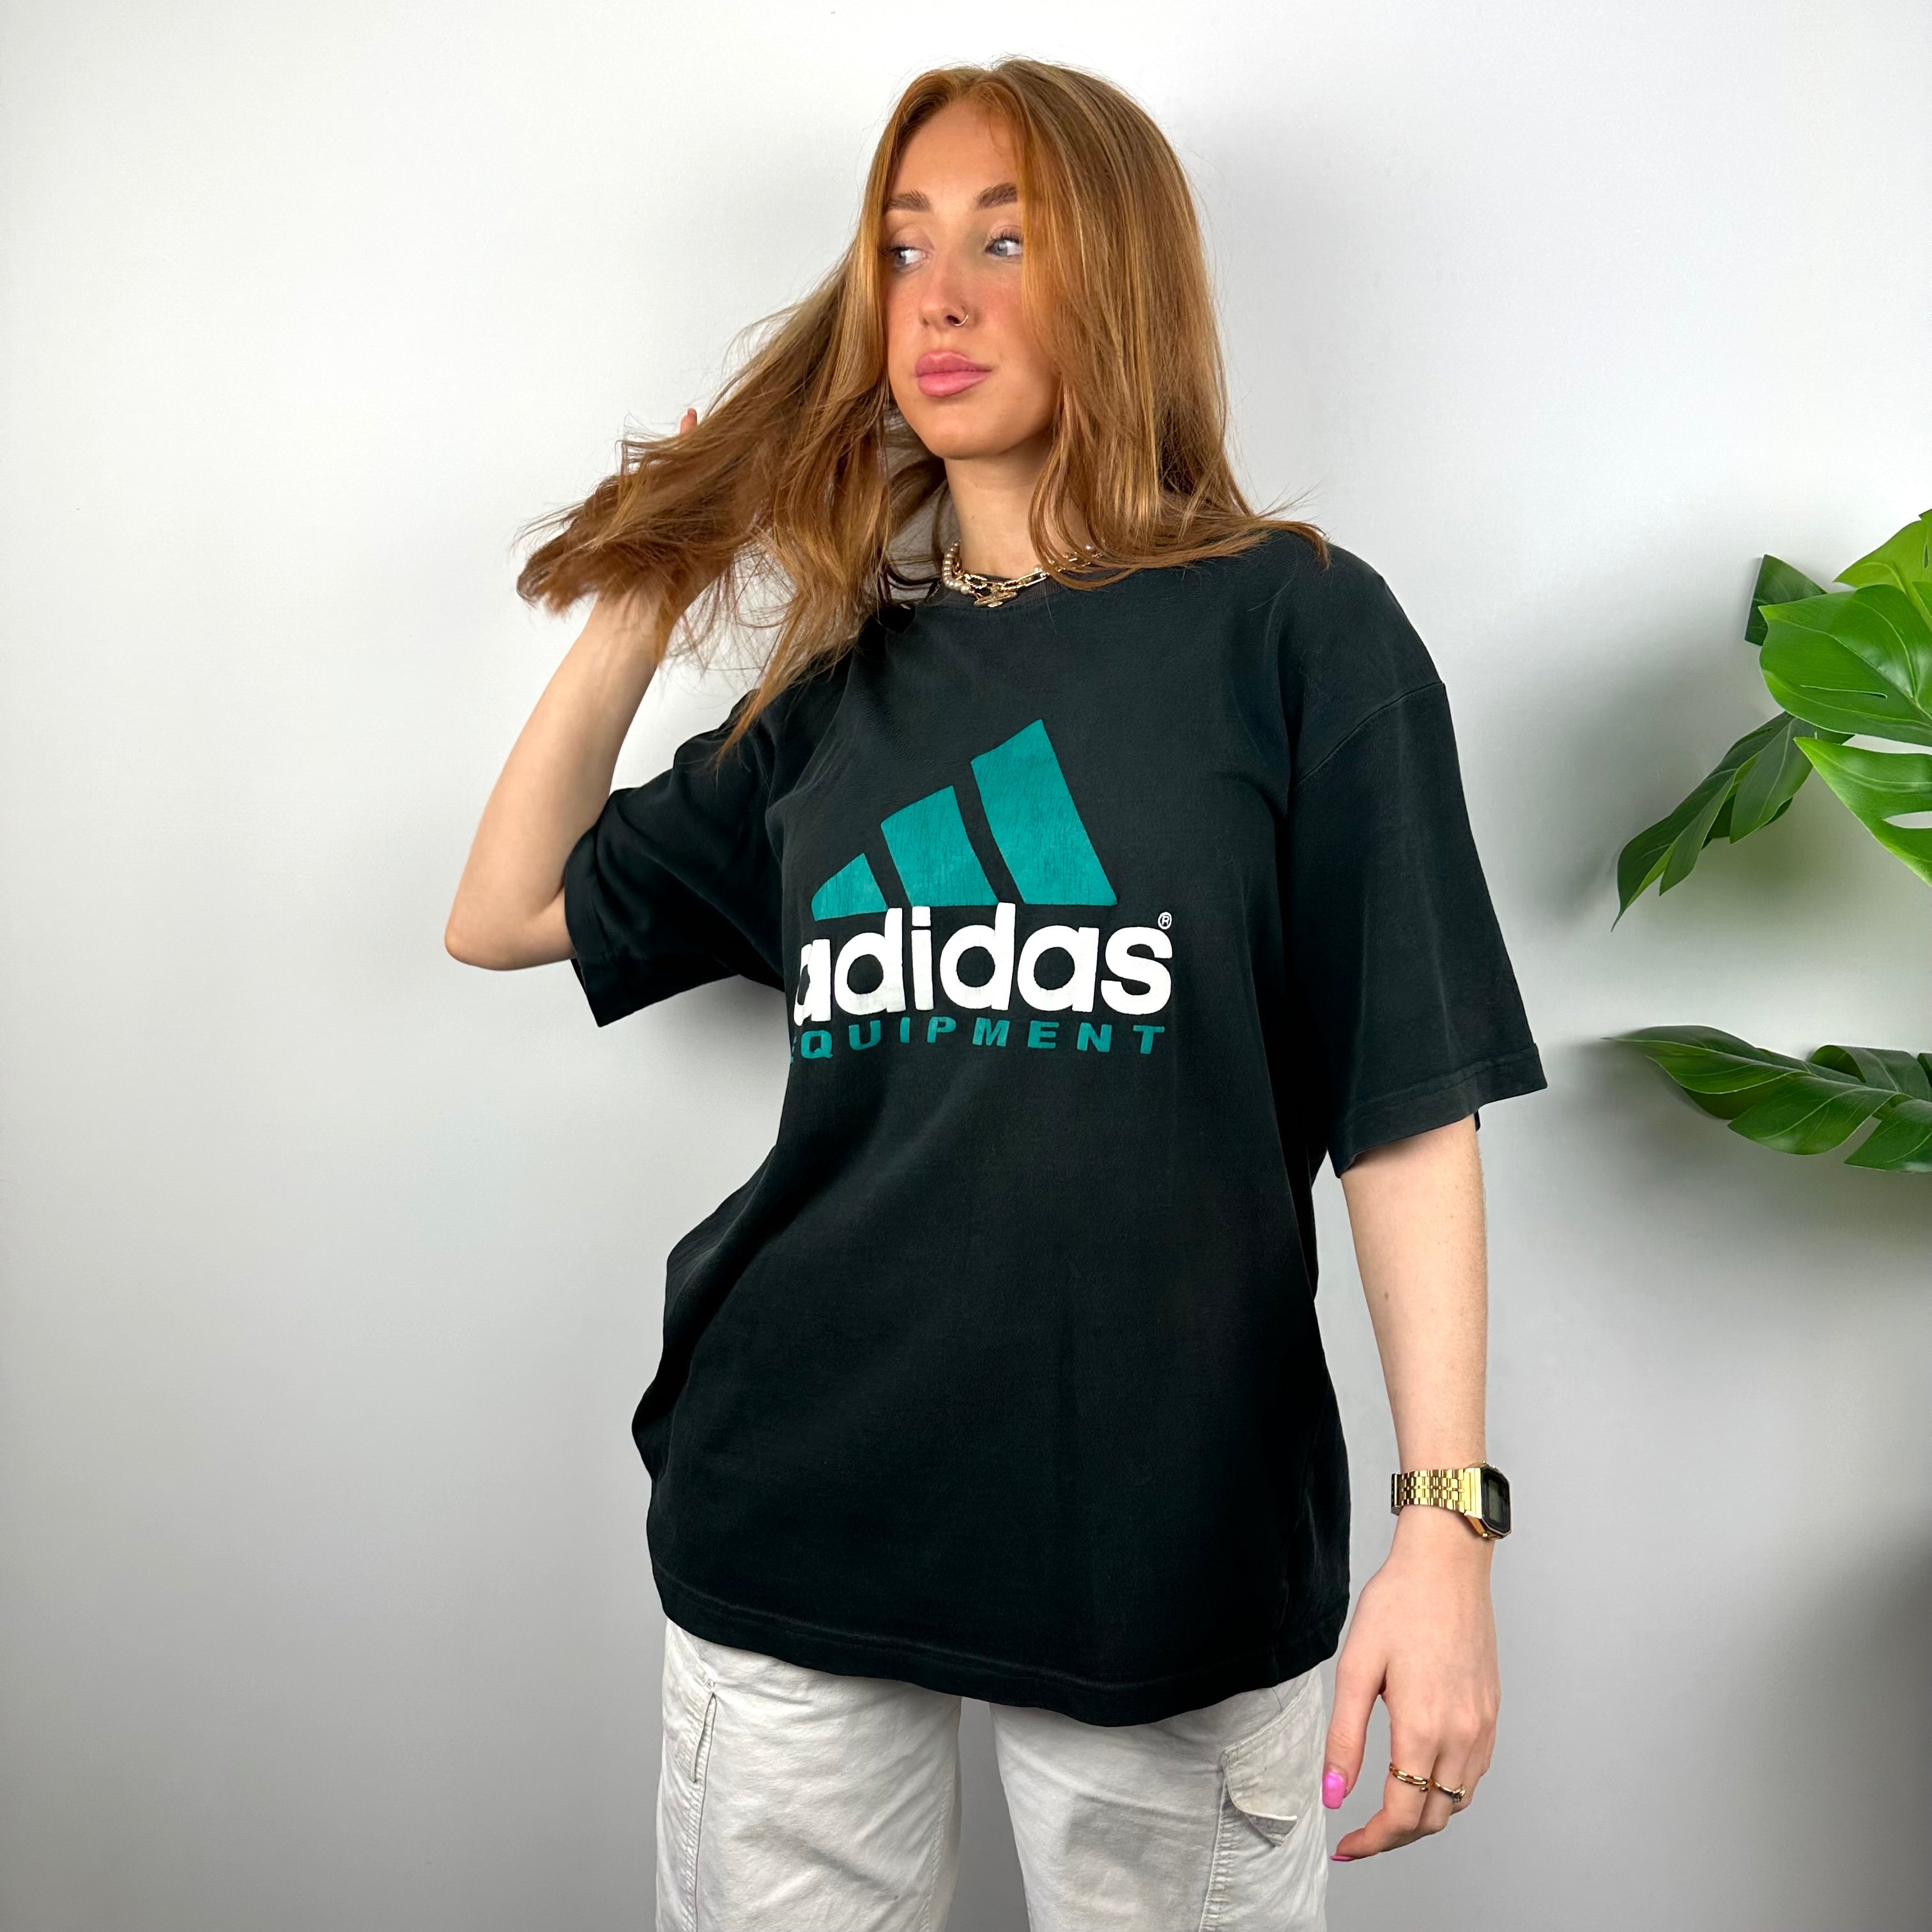 Adidas Equipment RARE Black Spell Out T Shirt (L)